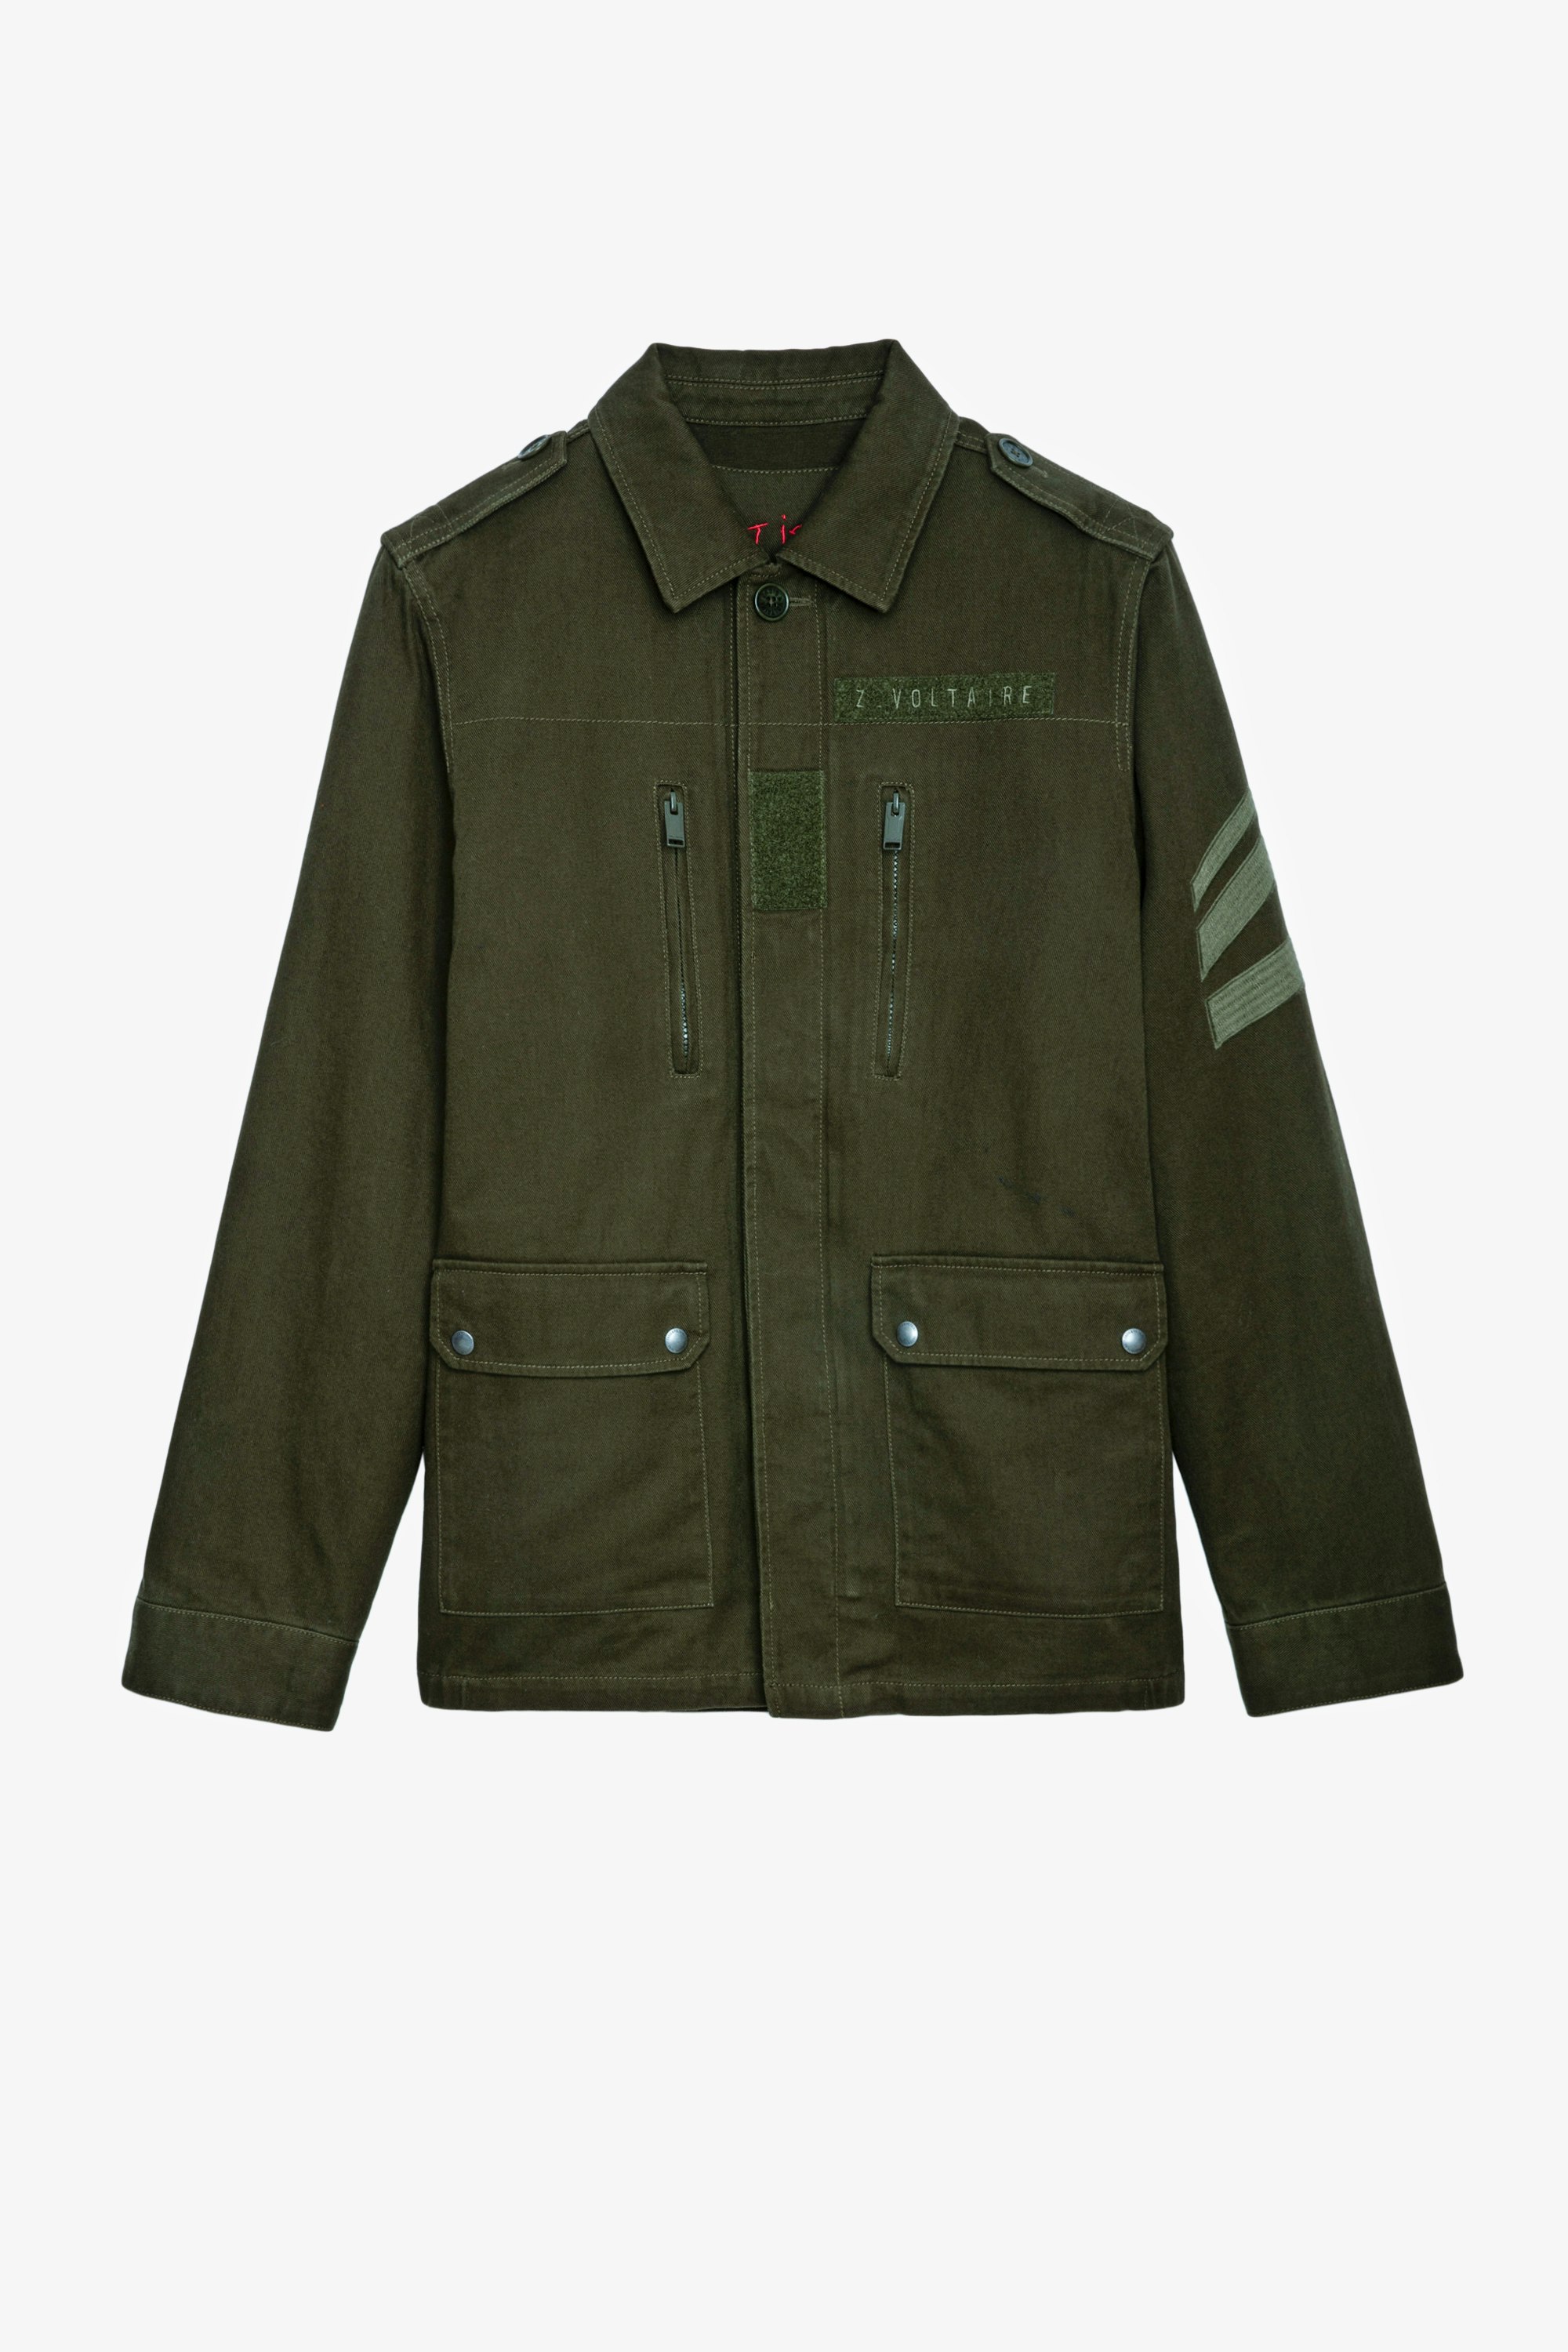 Kido Heavy Arrow ジャケット Men's khaki cotton military jacket 